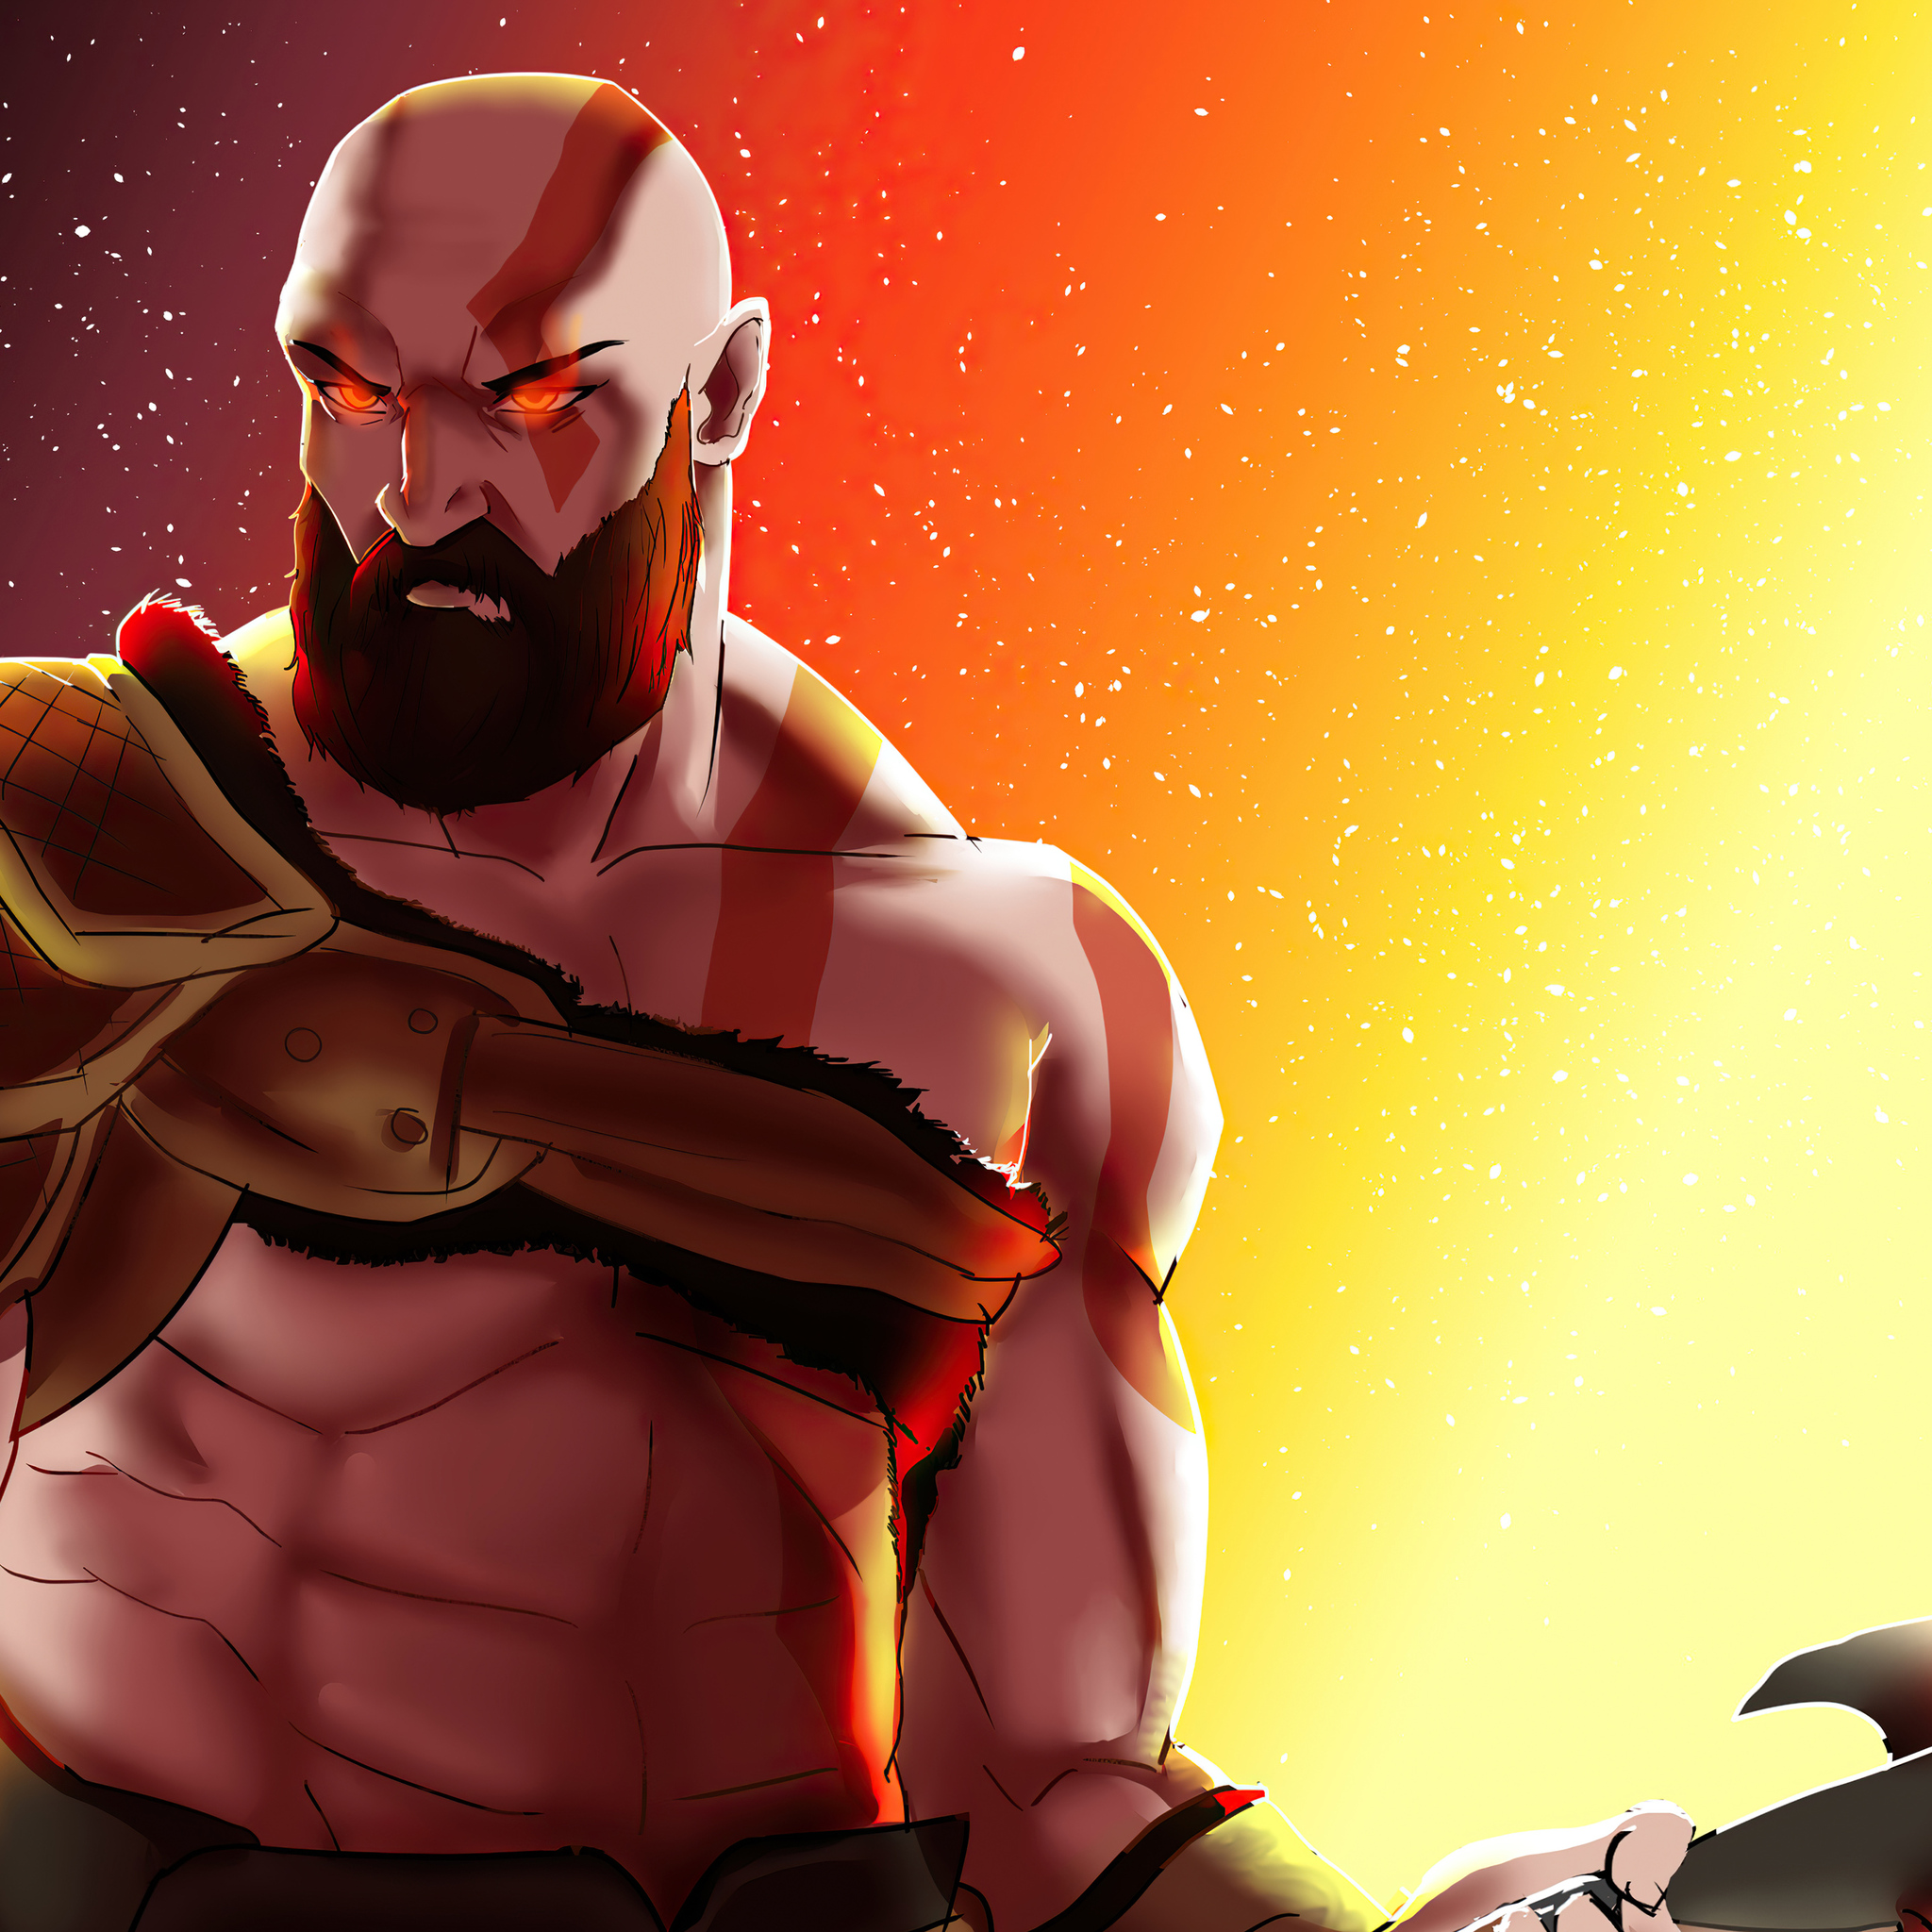 the-angry-kratos-ss.jpg